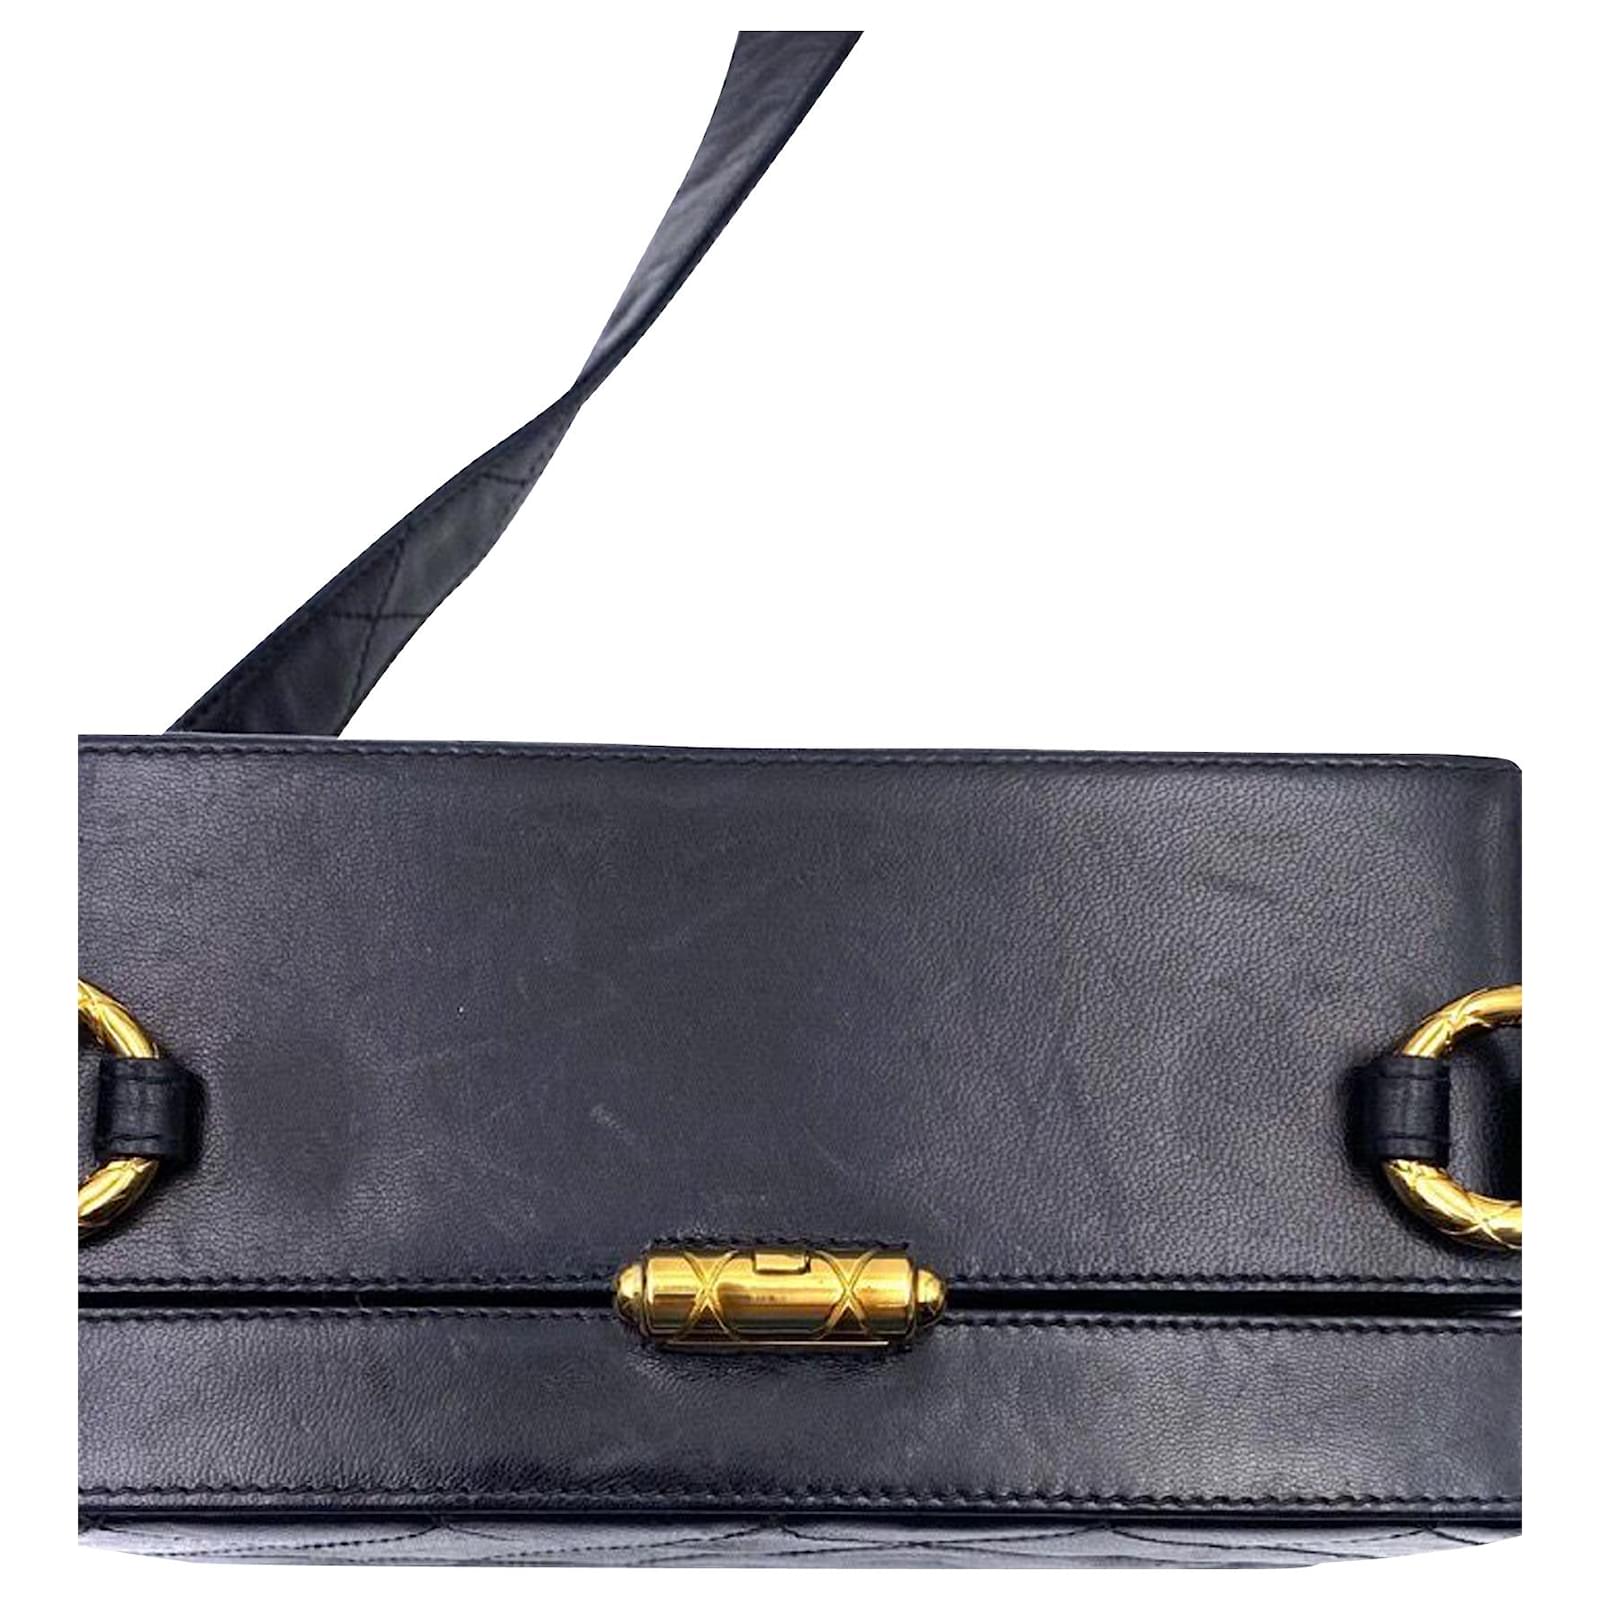 Chanel 1991 vintage shoulder box bag in black quilted leather - DOWNTOWN  UPTOWN Genève